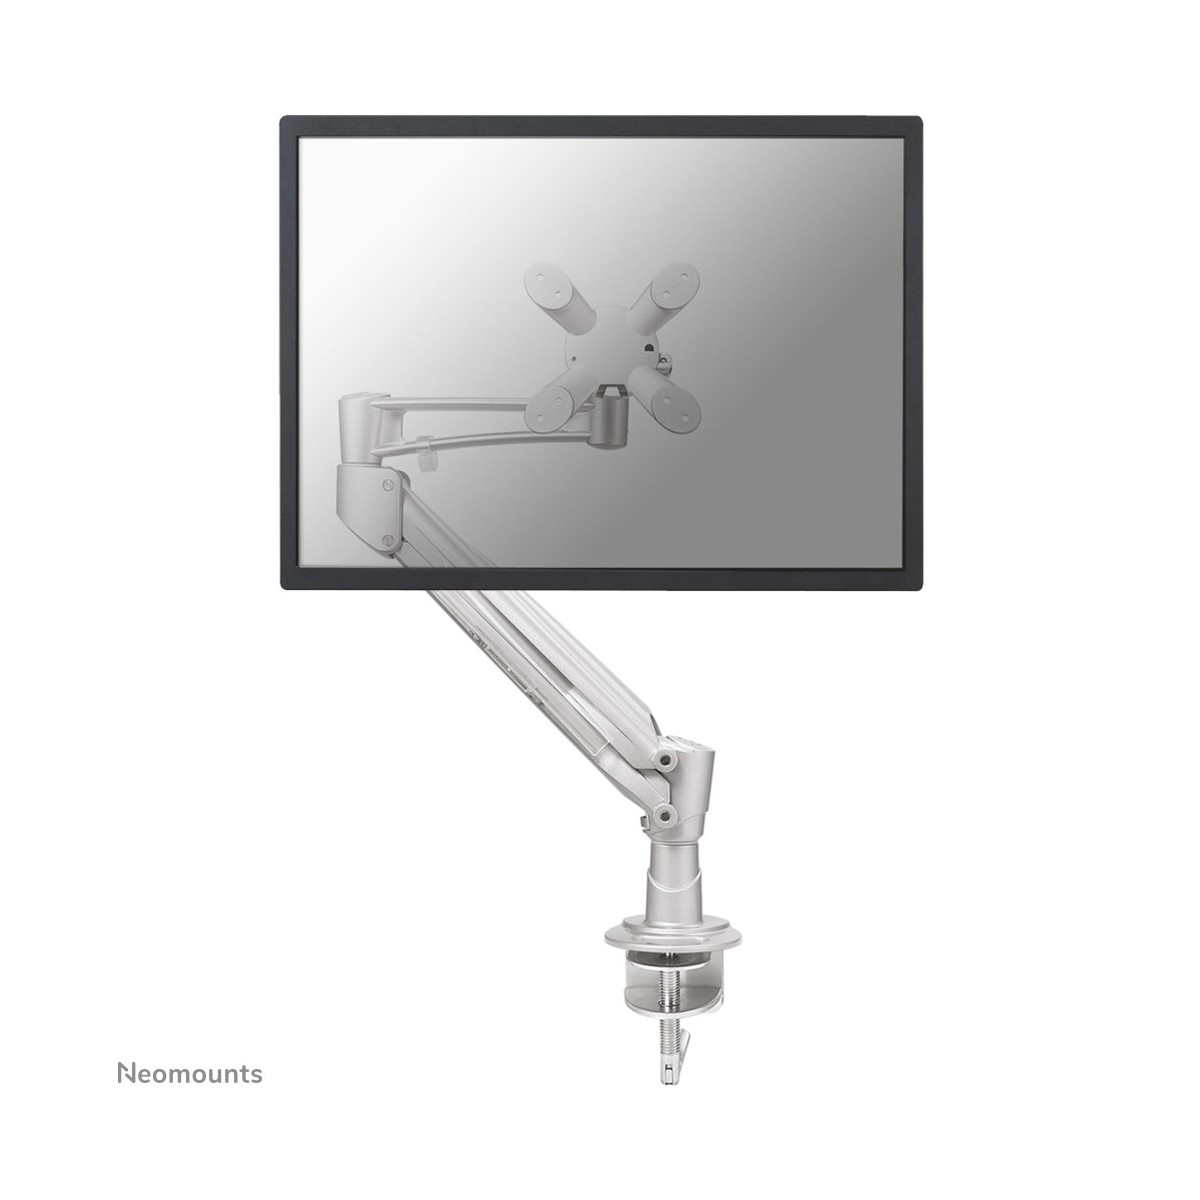 Neomounts flat screen desk mount - Clamp - 9 kg - 25.4 cm (10) - 76.2 cm (30) - 100 x 100 mm - Silver